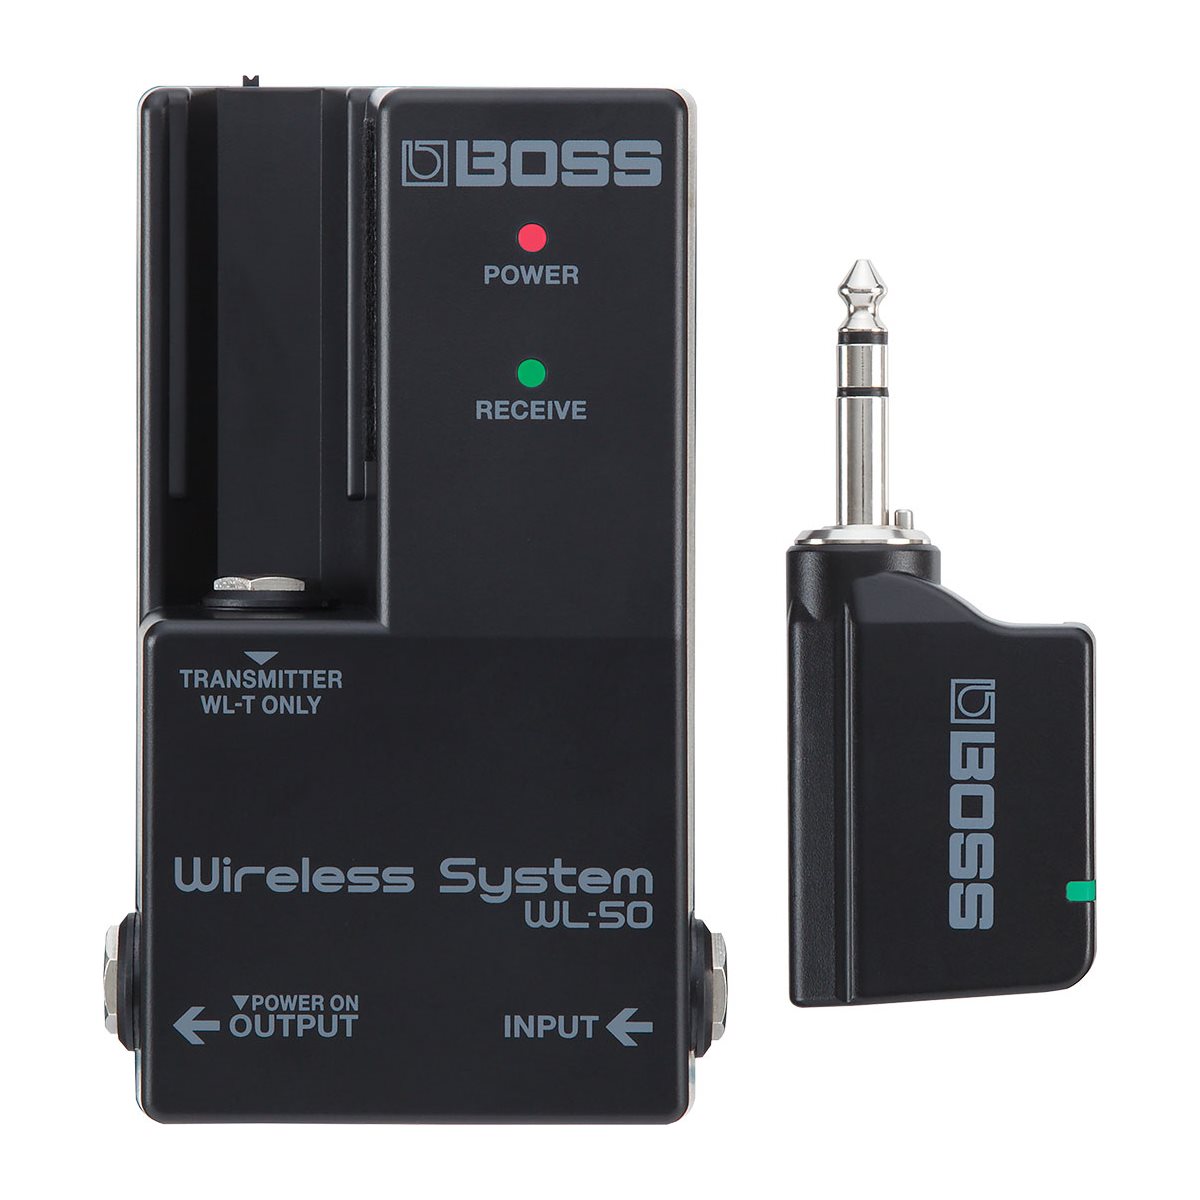 BOSS - WL-50 - Wireless System